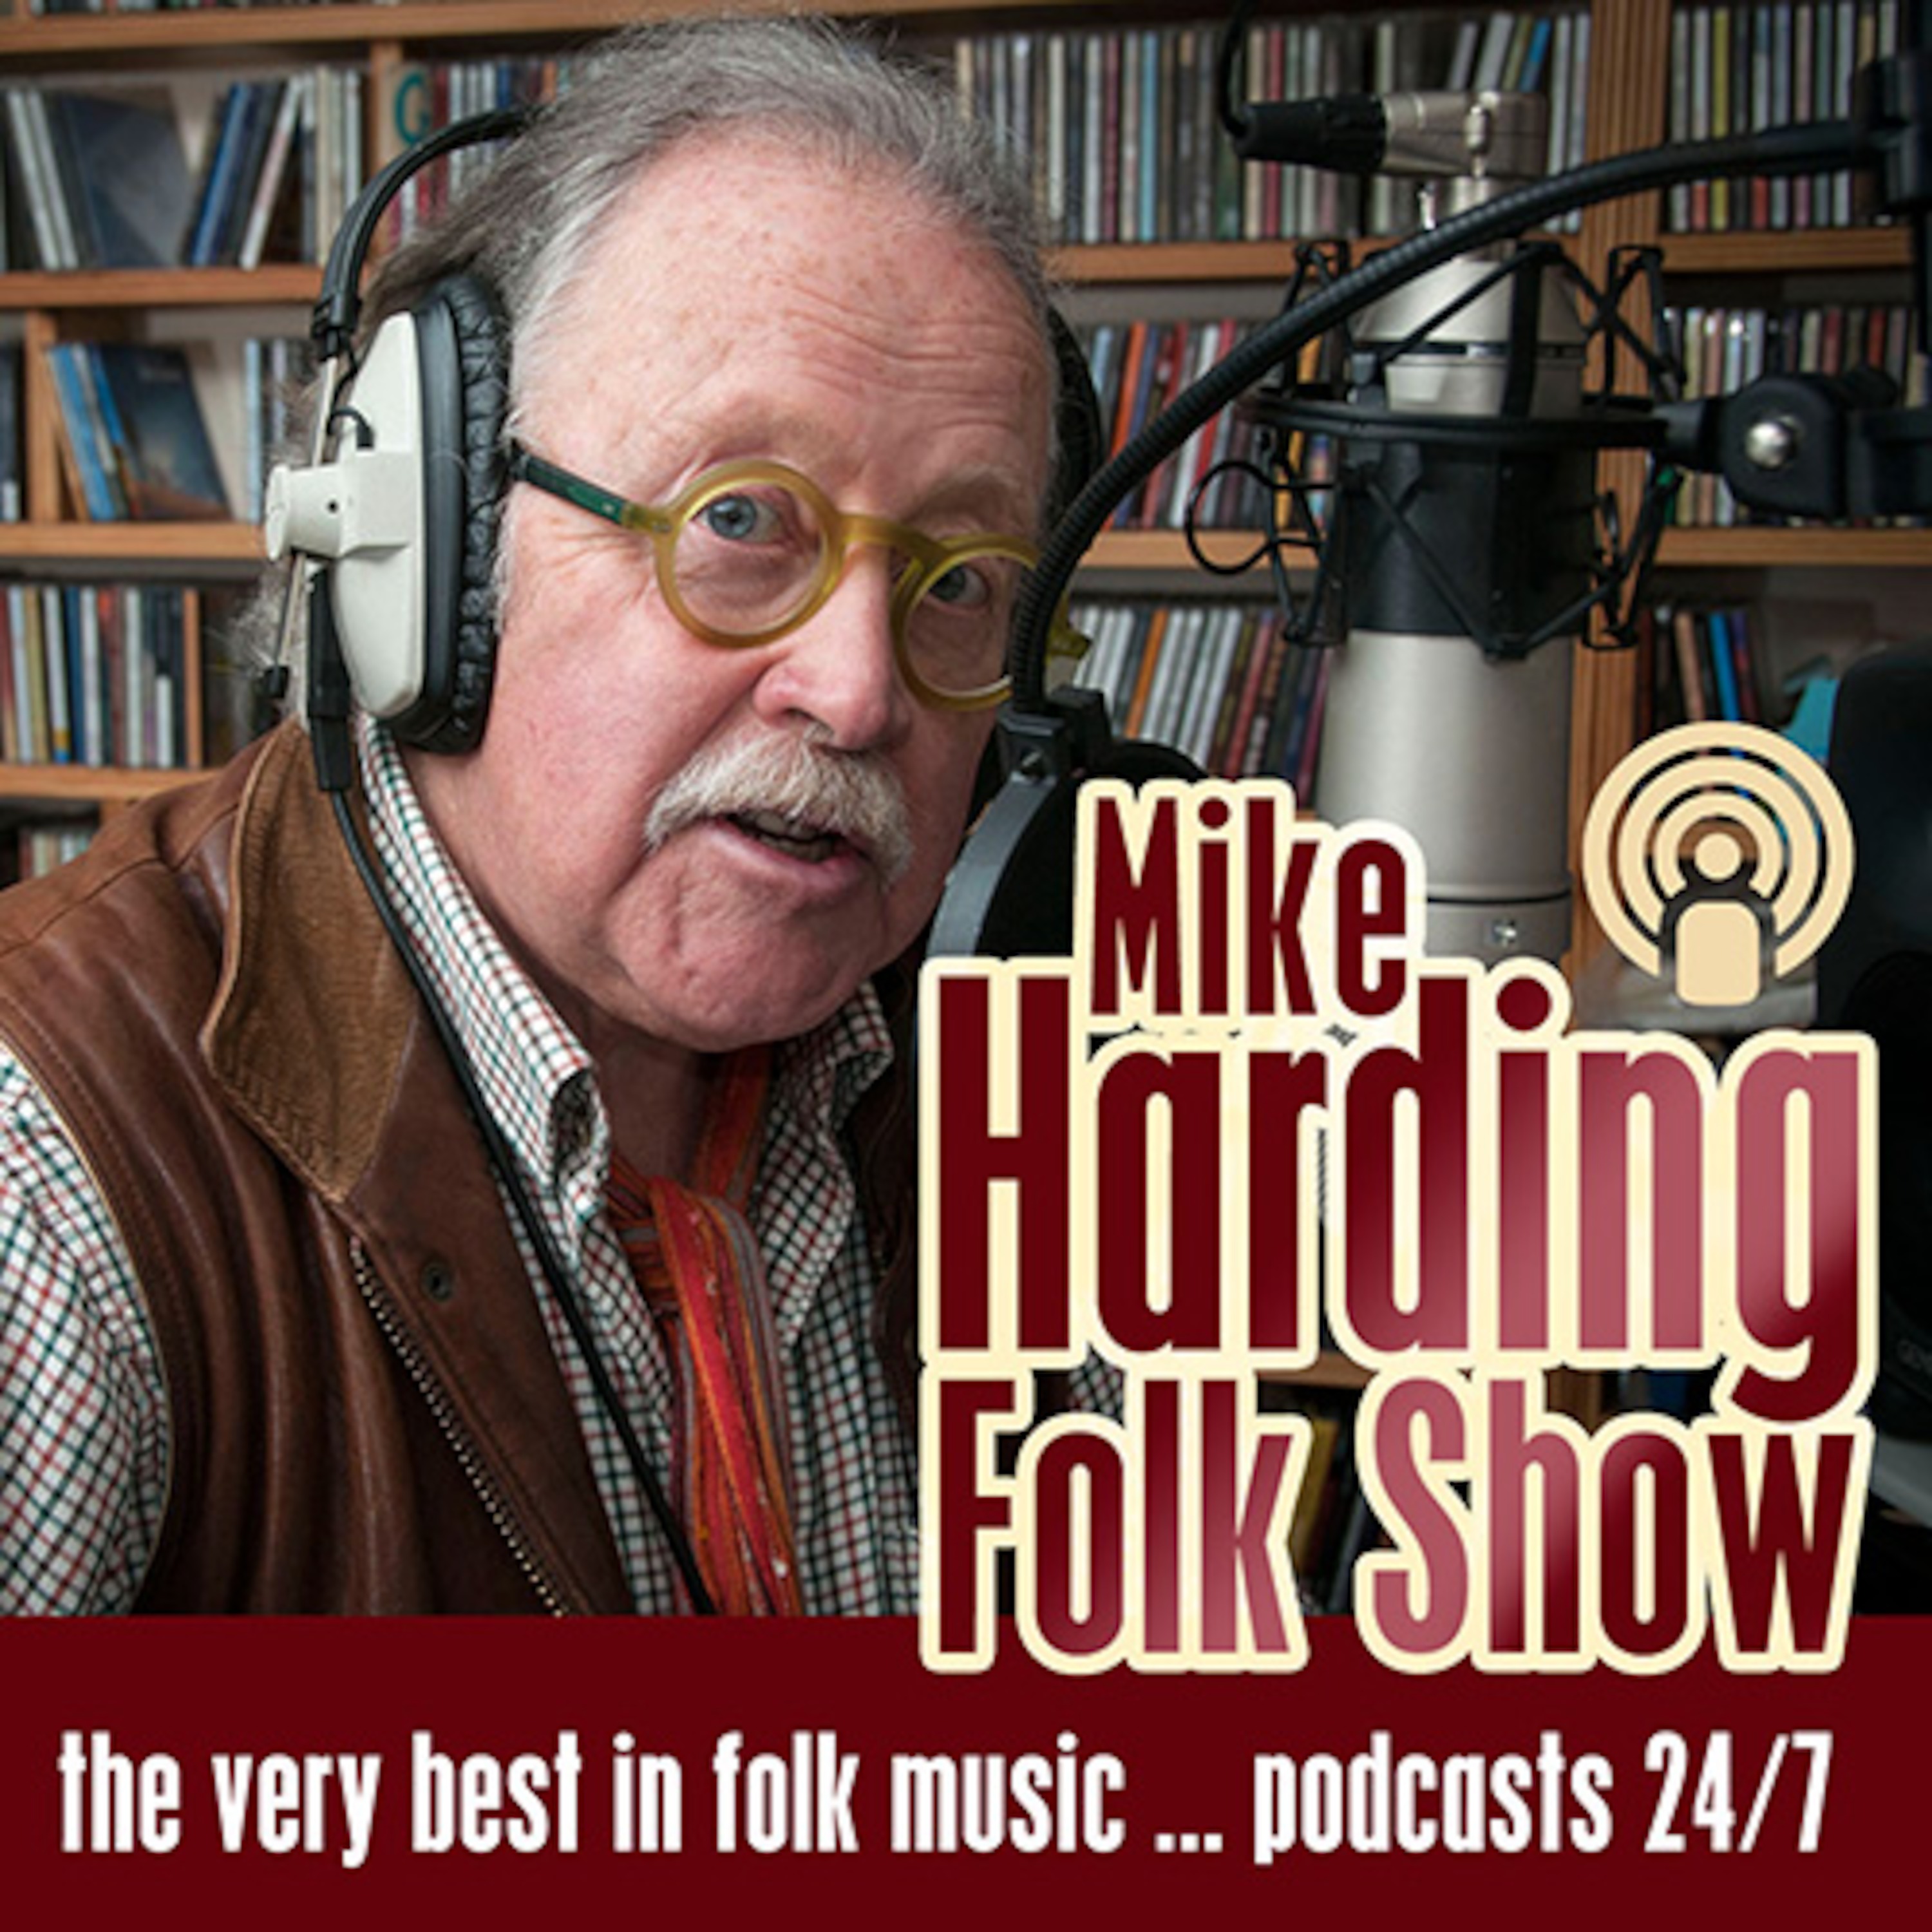 Mike Harding Folk Show 132